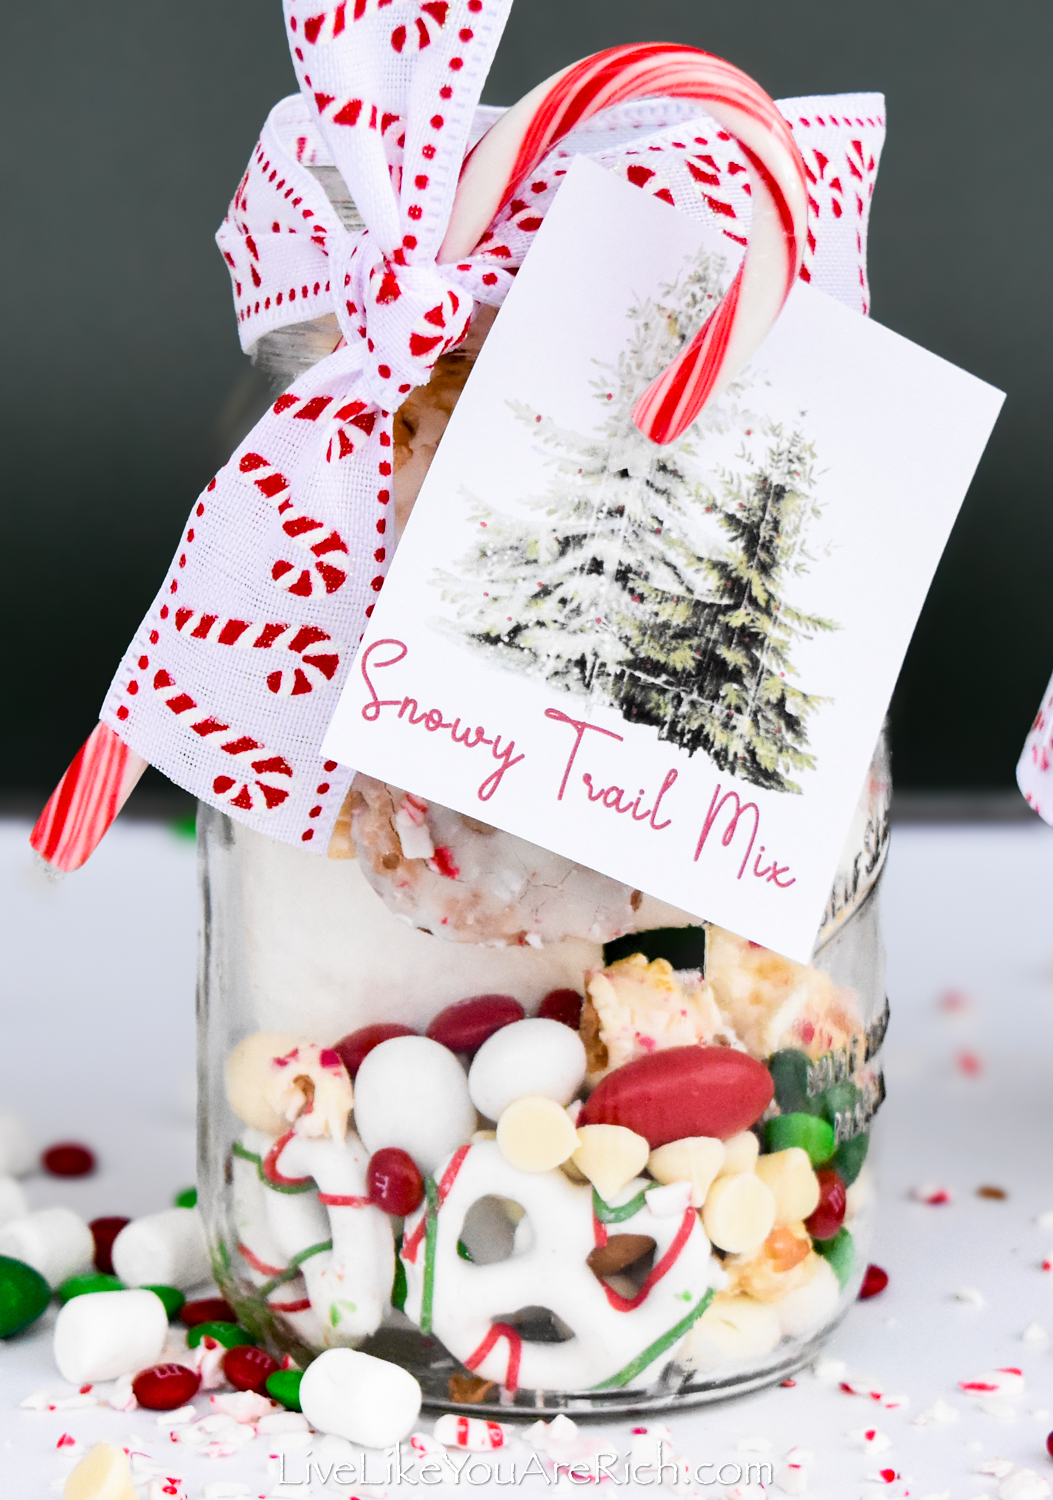 Neighbor Christmas Gift: Snowy Trail Mix Plus Free Printable